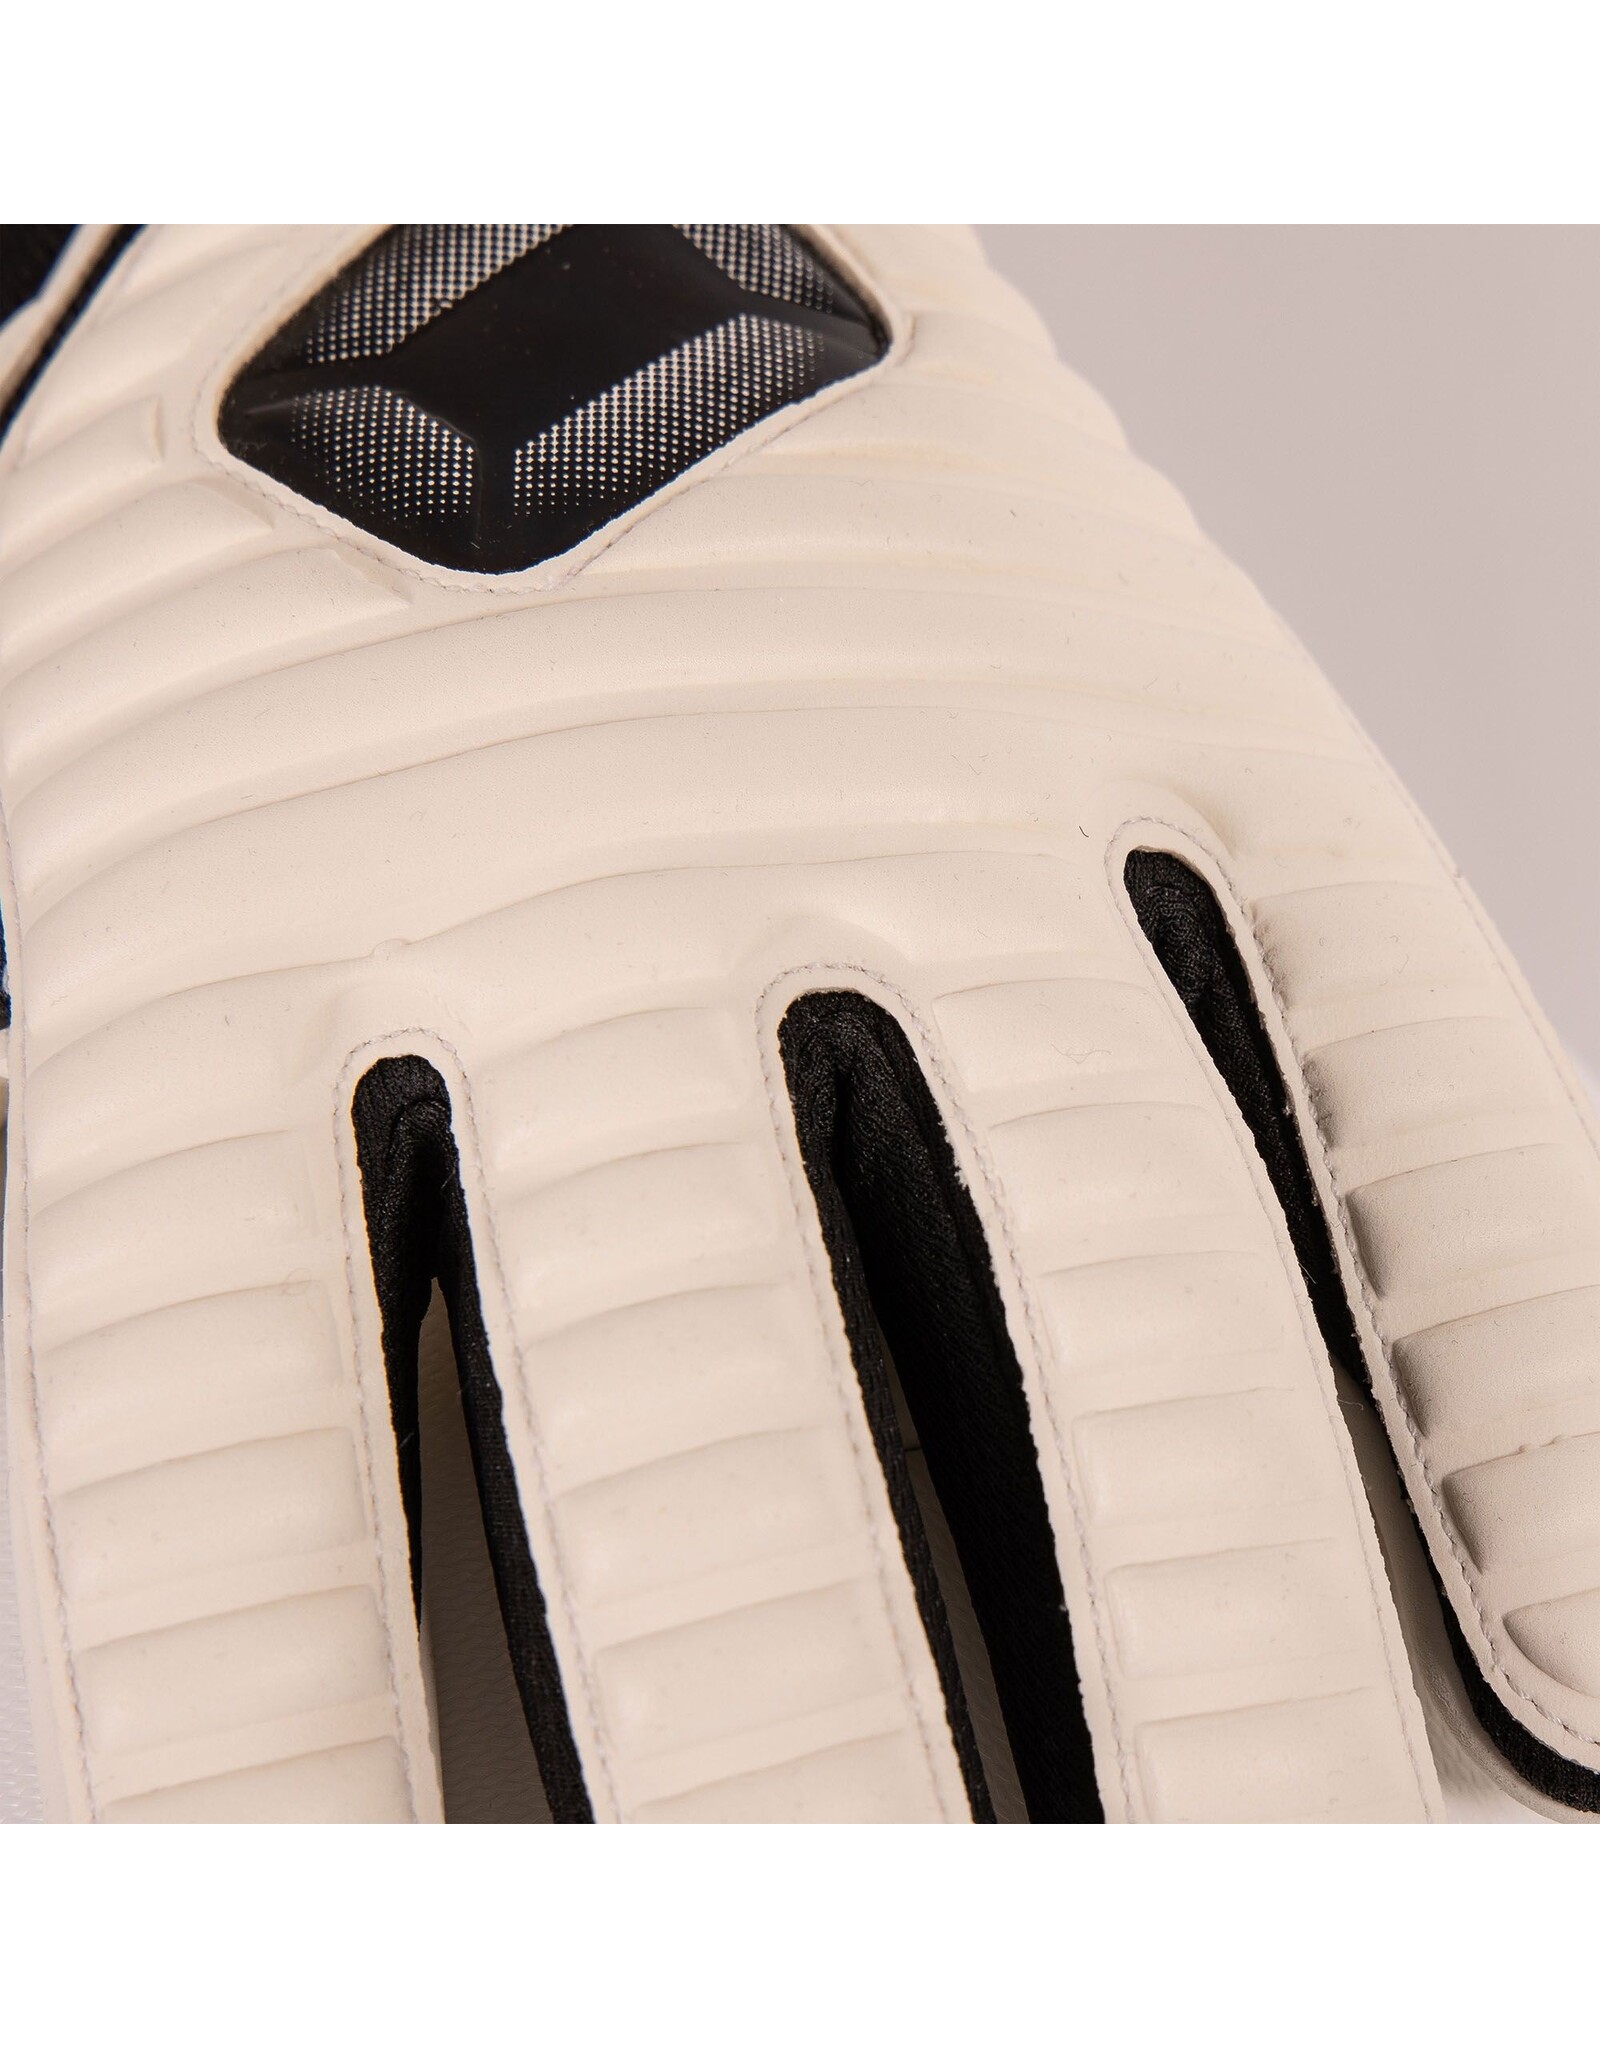 Stanno Legacy Goalkeeper Gloves II-White-Black